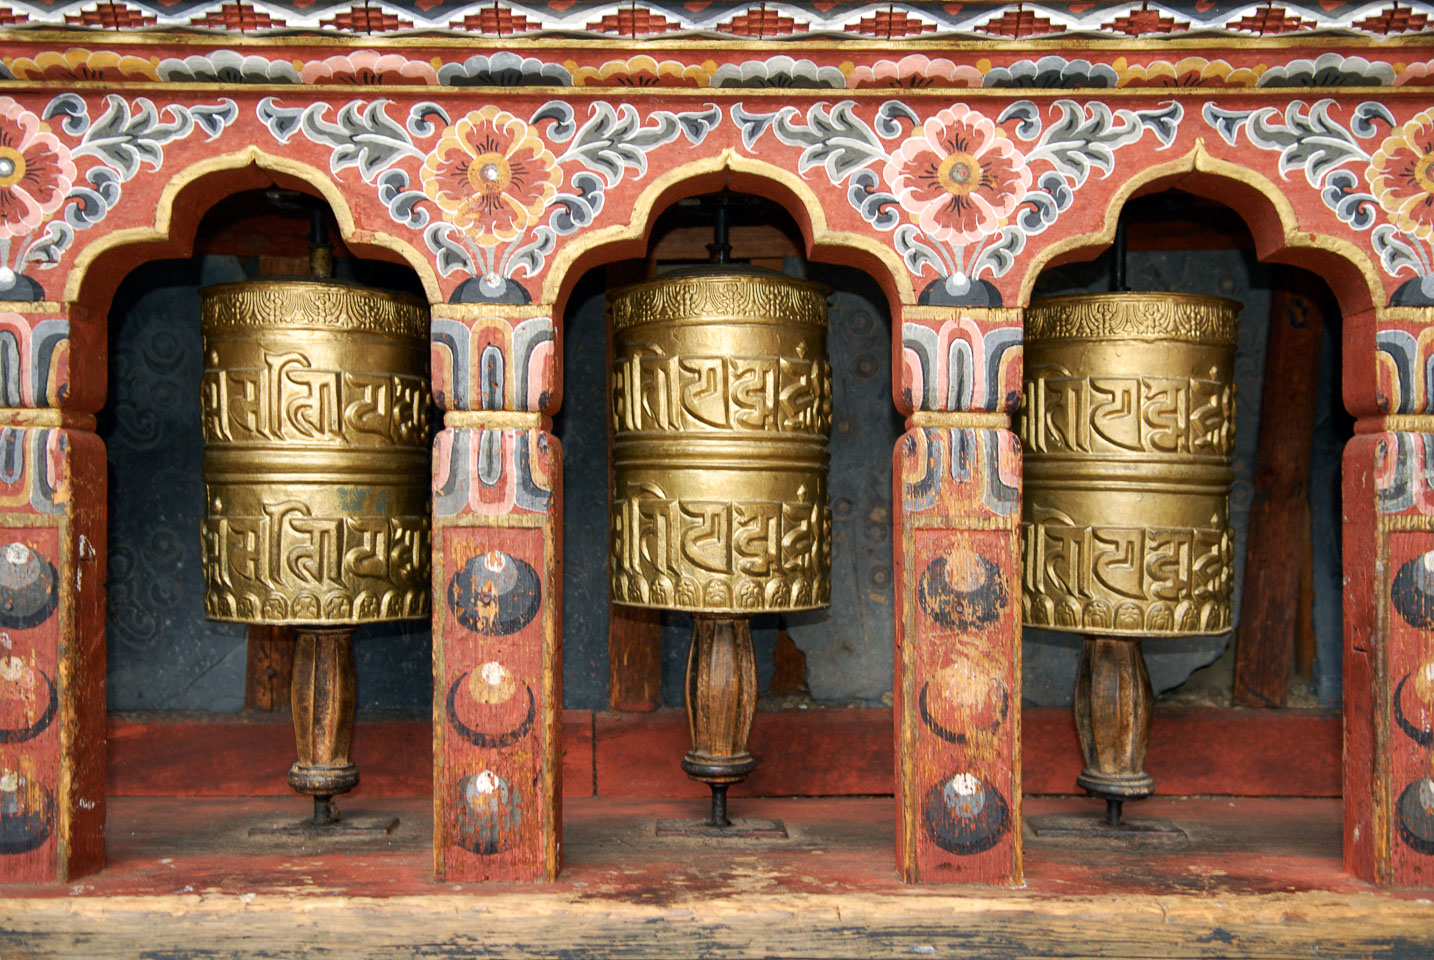 SB06425-Prayer-wheels-at-the-Trashi-Chhoe-Dzong-in-Thimpu.jpg